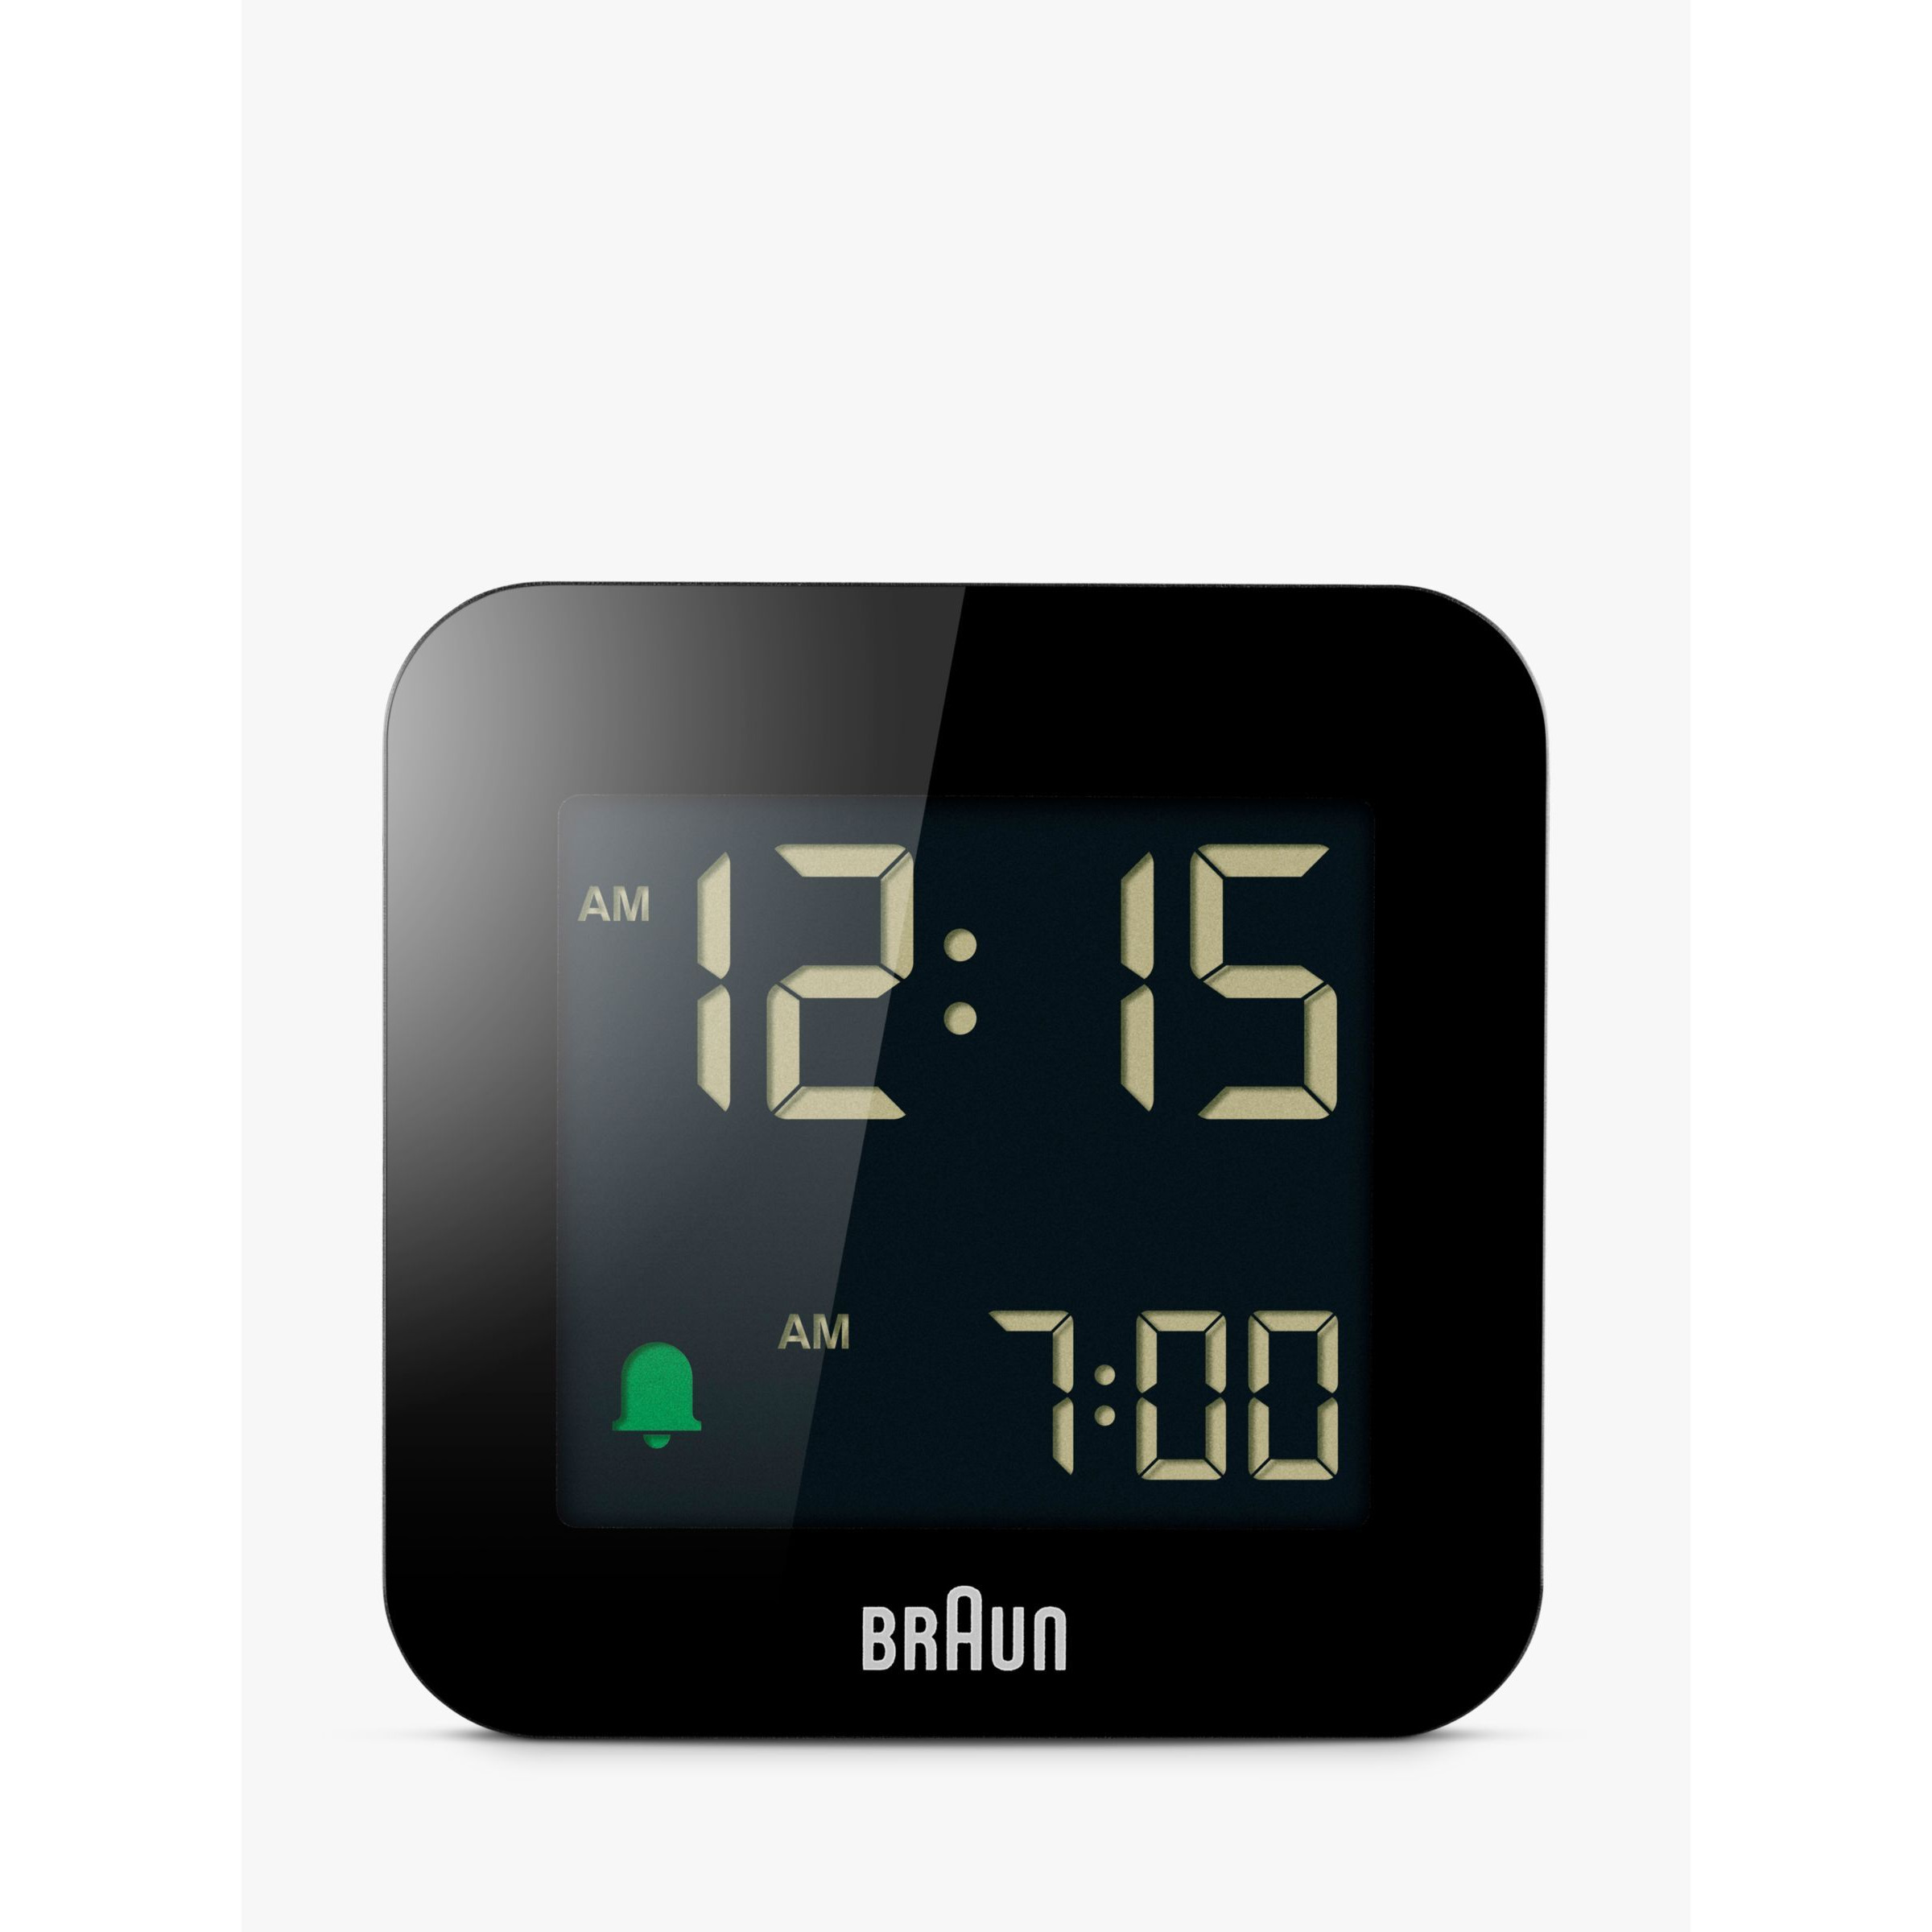 Braun Digital Travel Alarm Clock - image 1